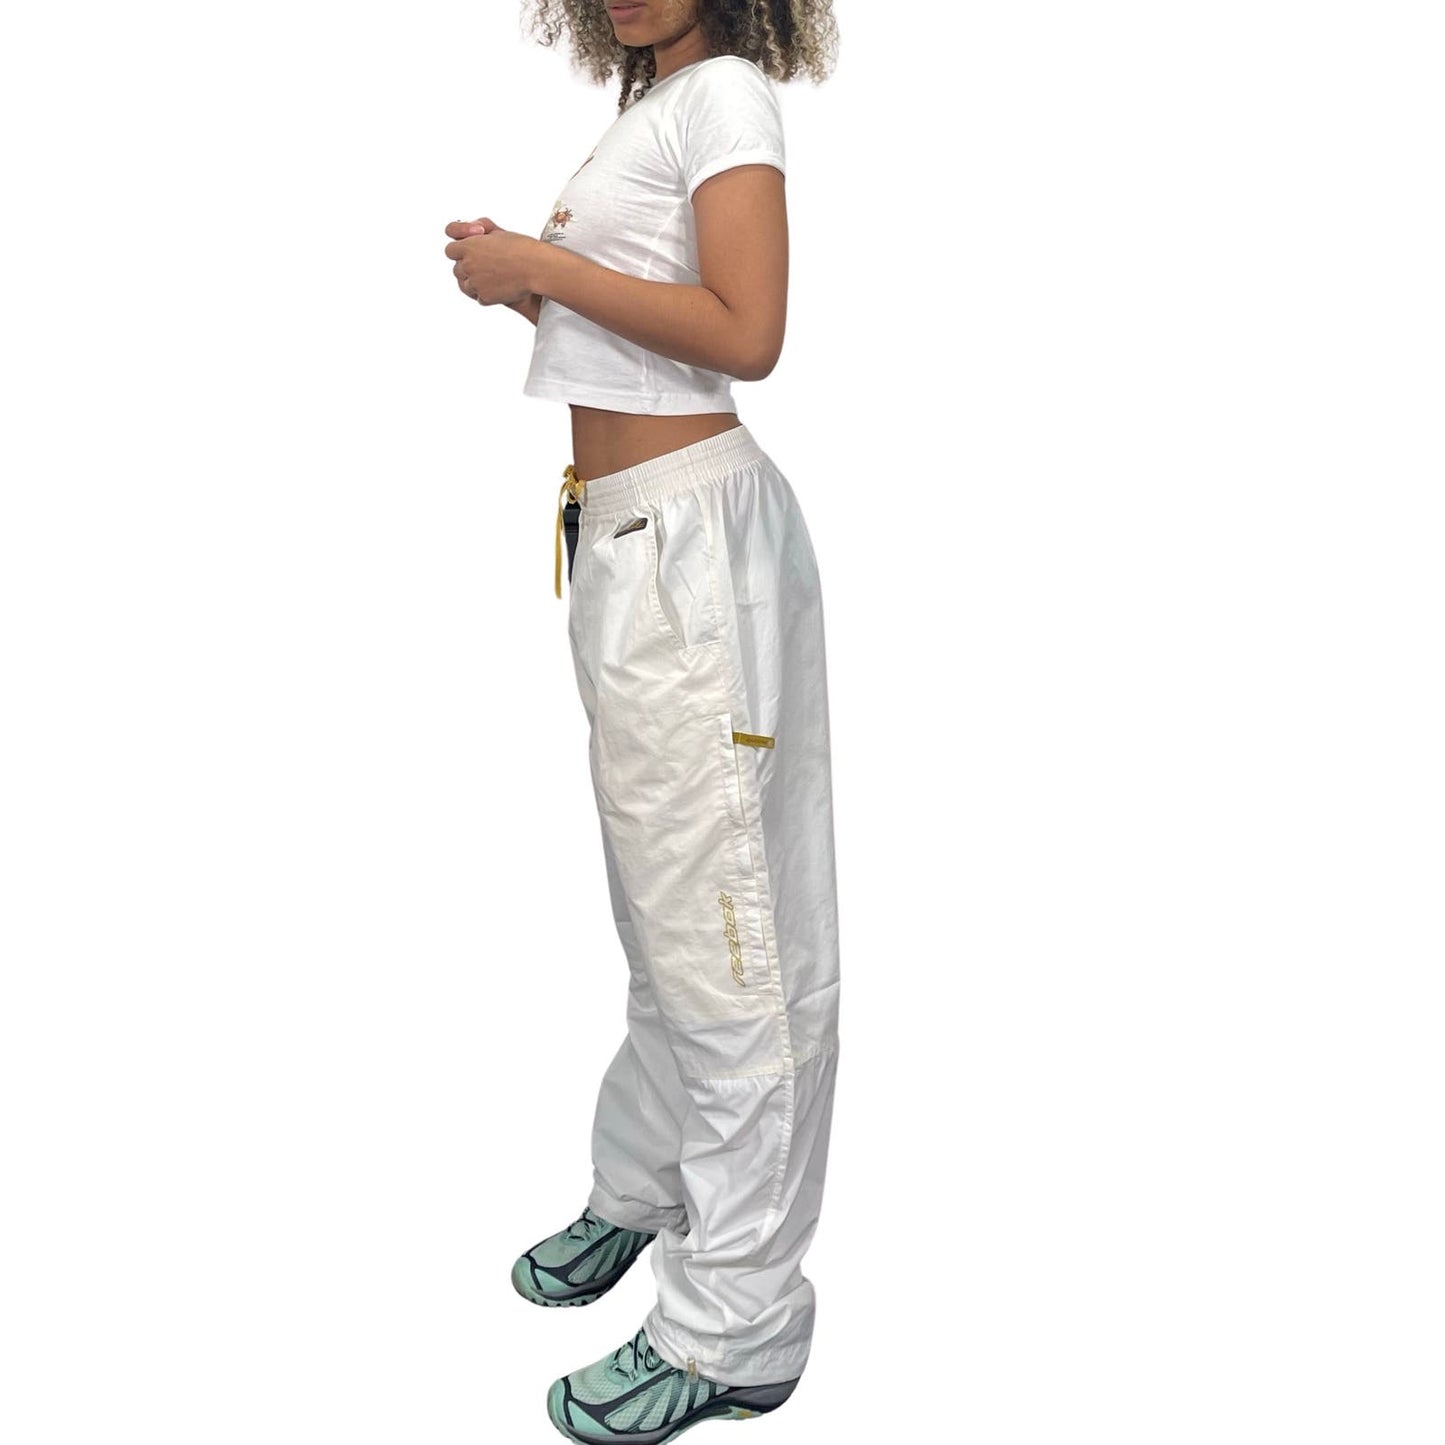 Vintage 2000s Reebok white and creamy Sweatpants Cargo (S-M) Skater Gorpcore